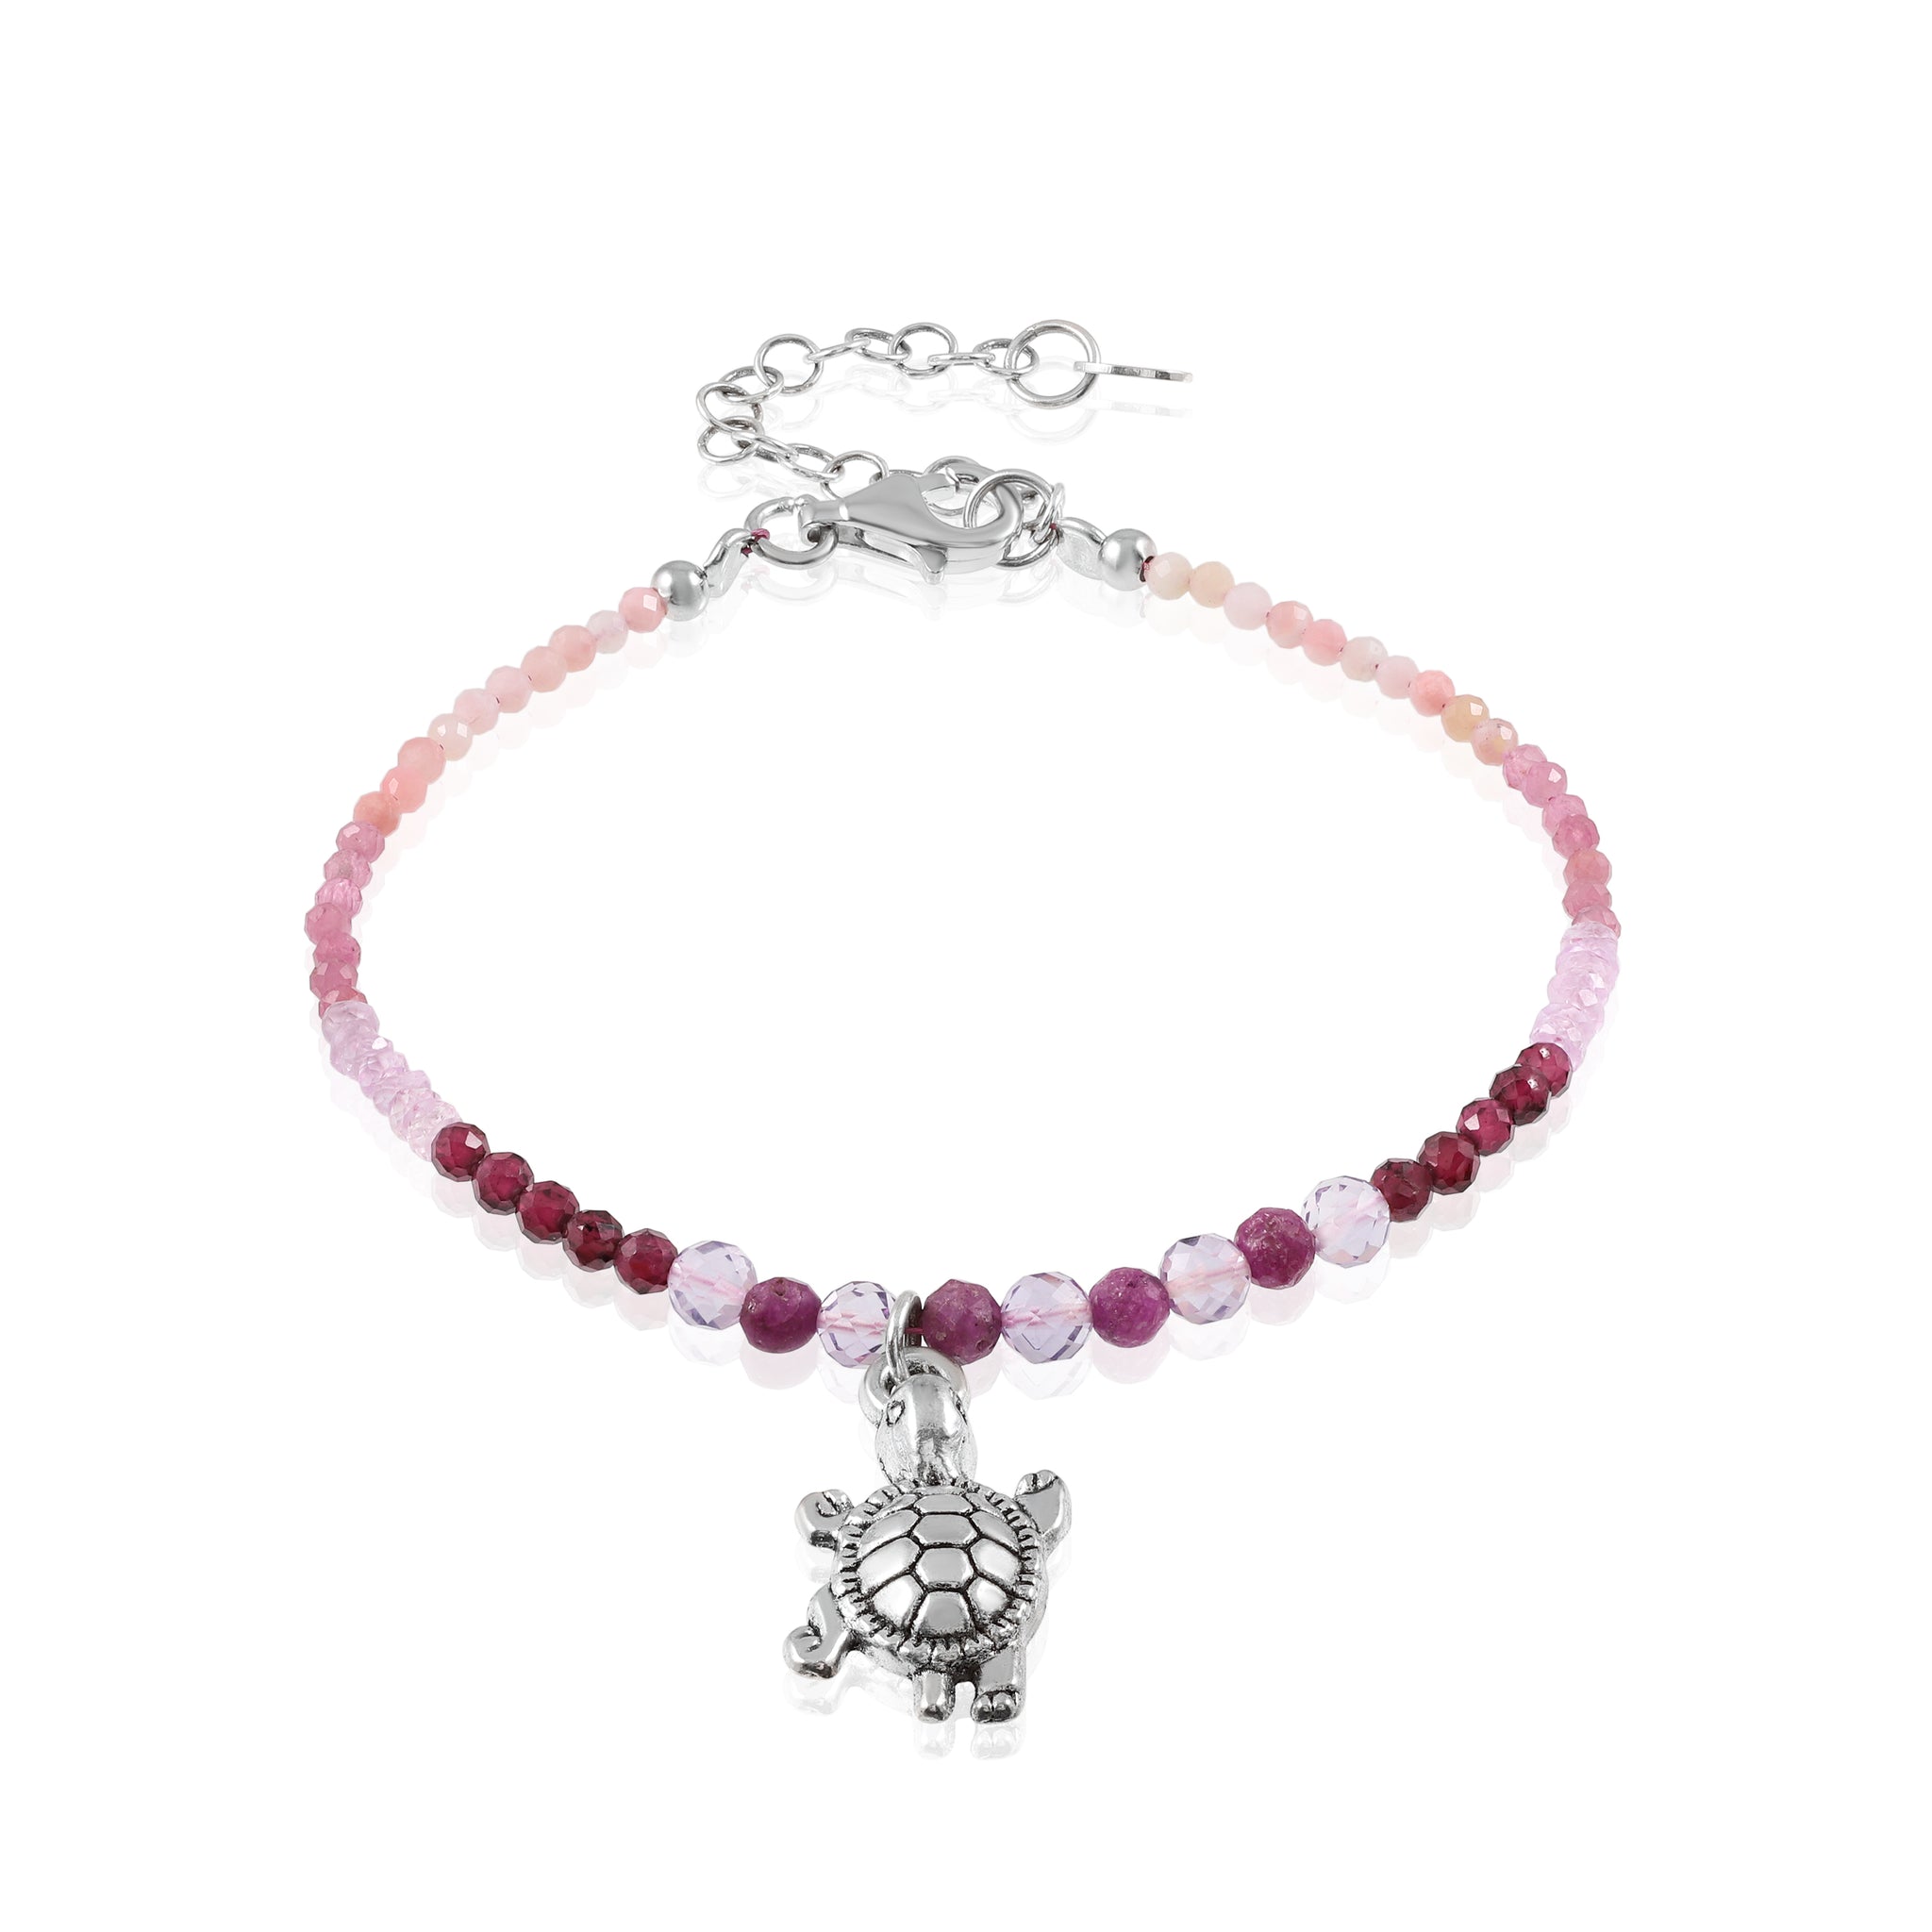 Complete Pink Gemstone Beads Bracelet